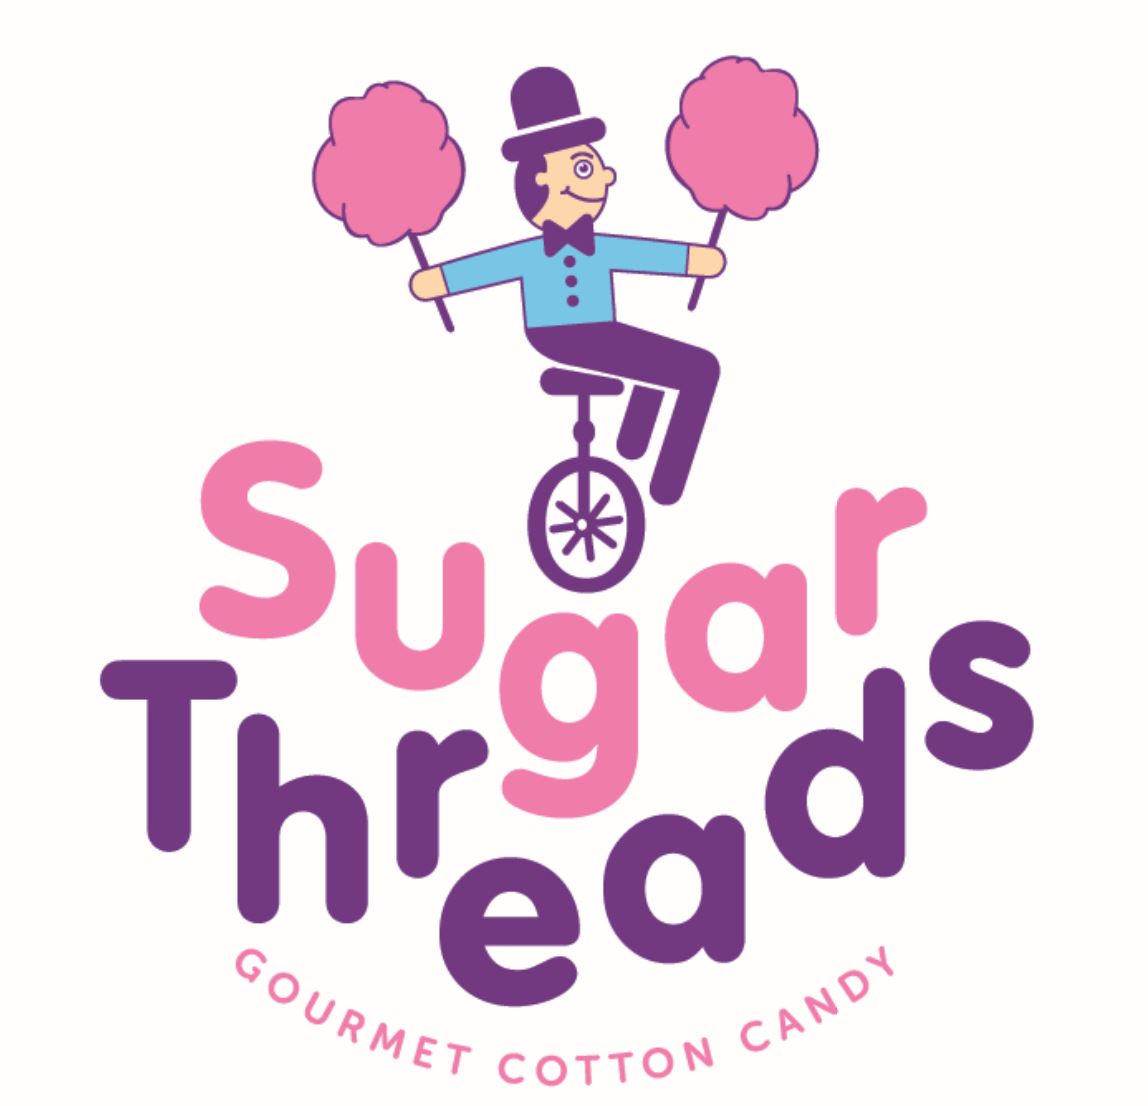 Sugar Threads Gourmet Cotton Candy logo